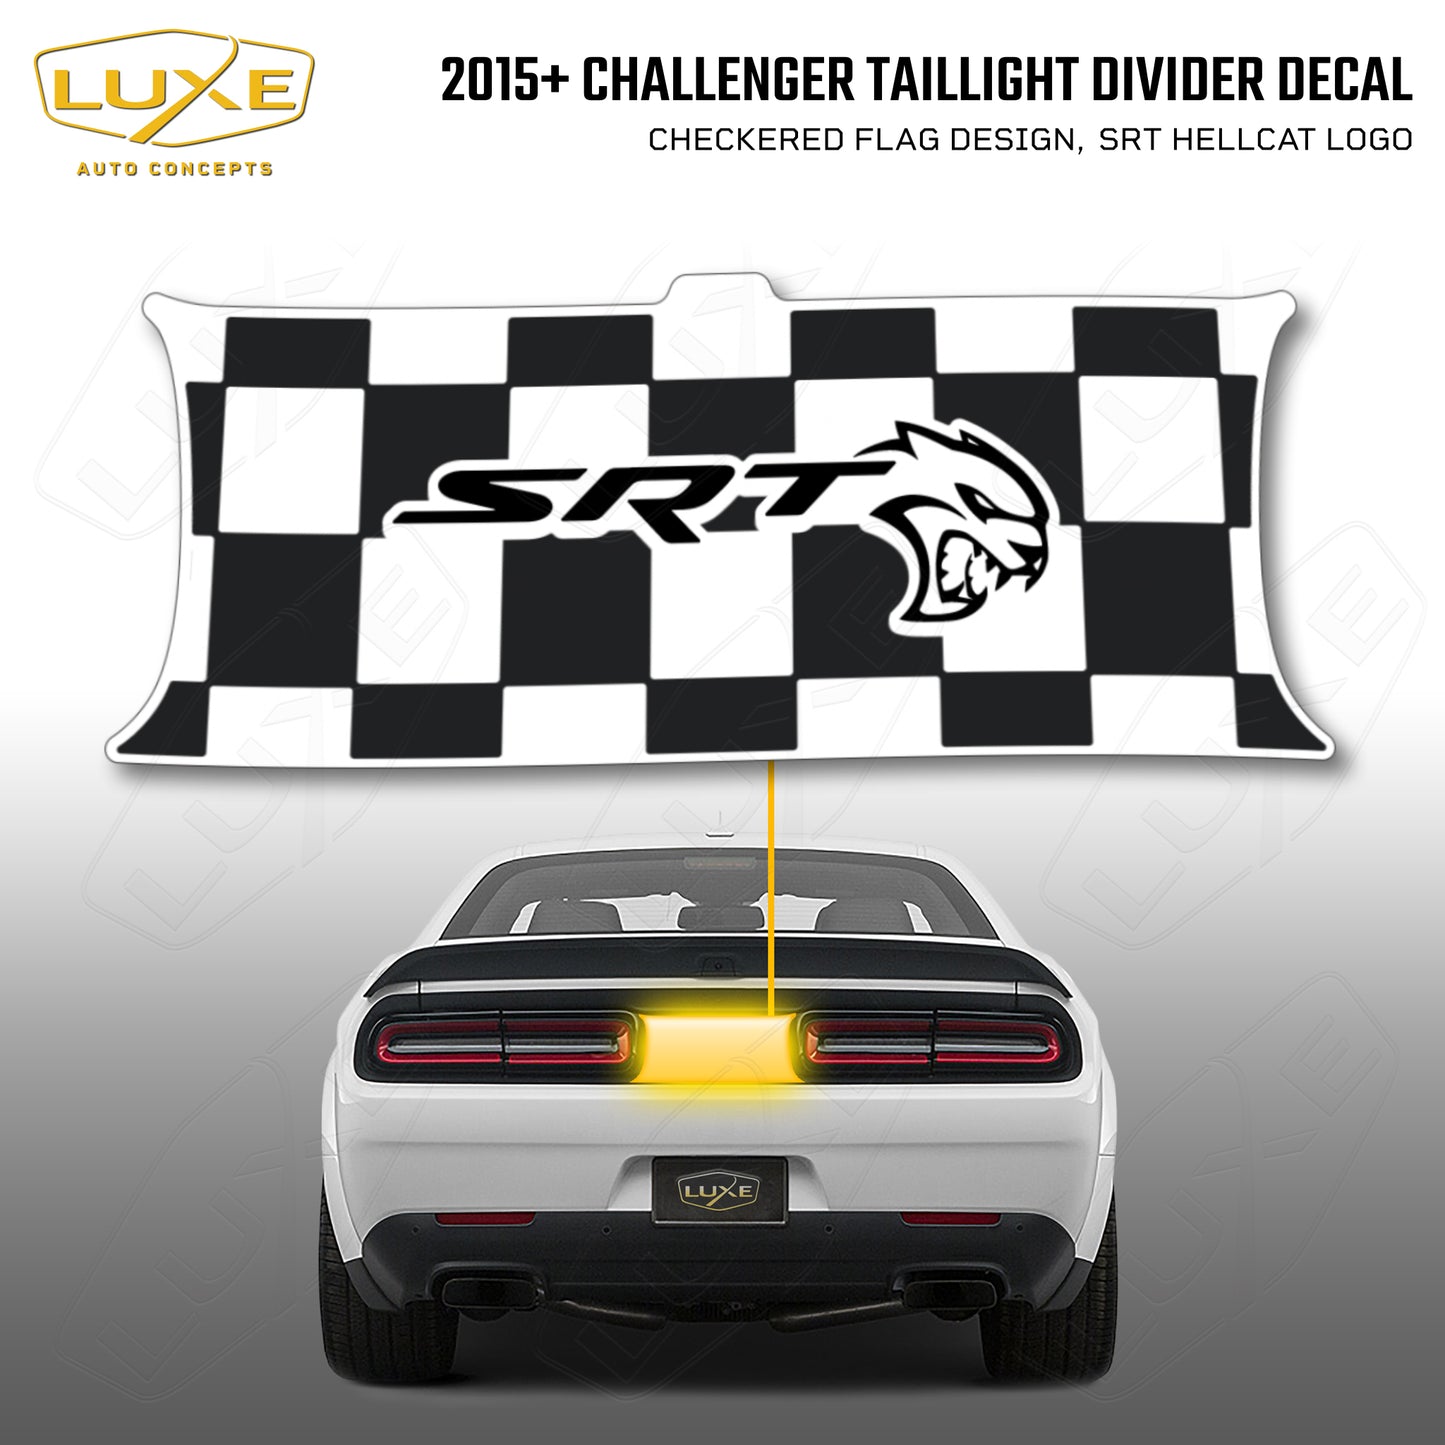 2015+ Challenger Taillight Center Divider Decal - Checkered Flag Design, SRT Hellcat Logo